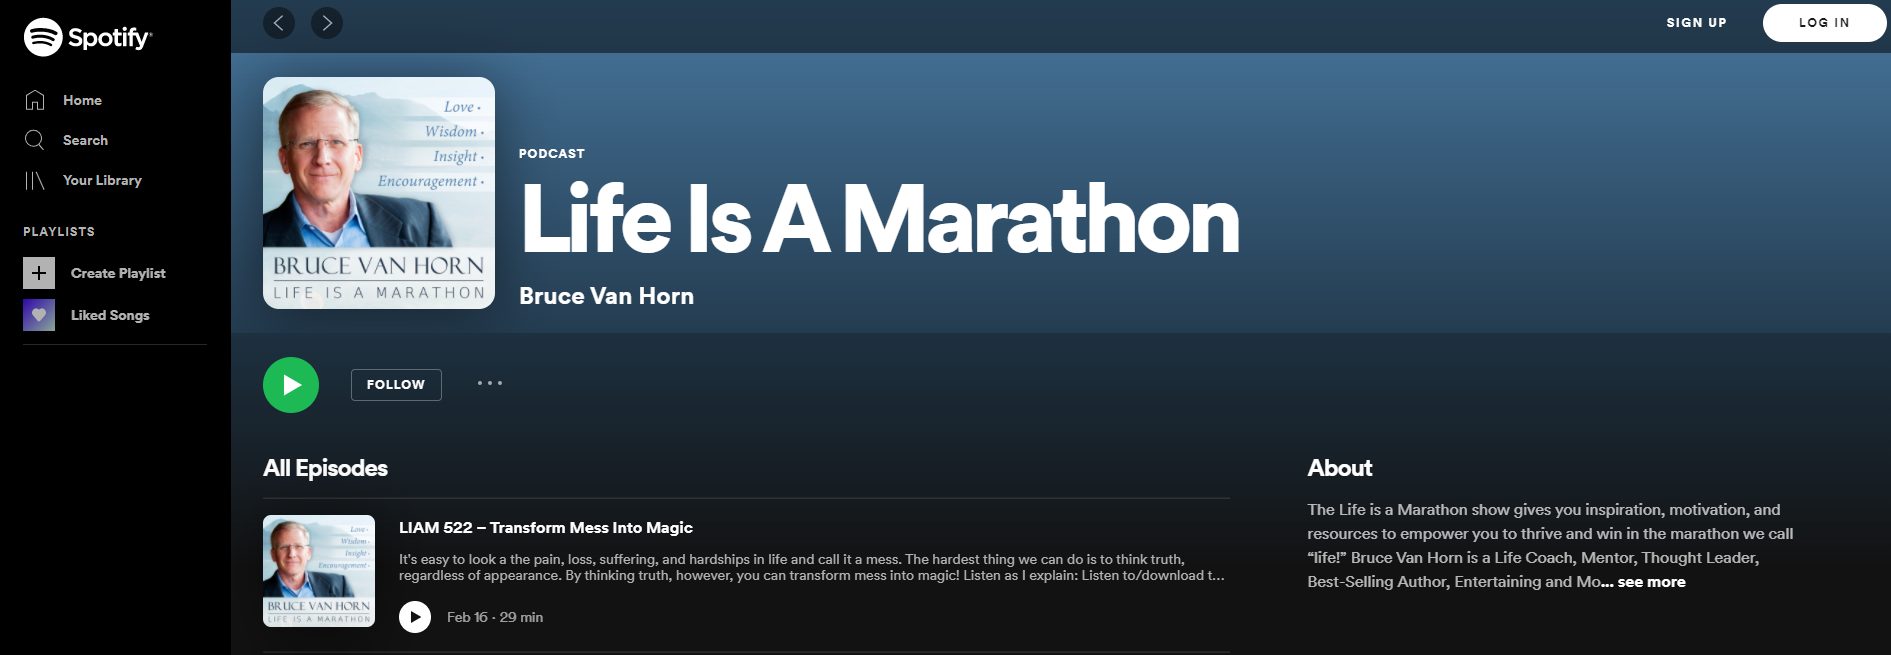 Life is a Marathon